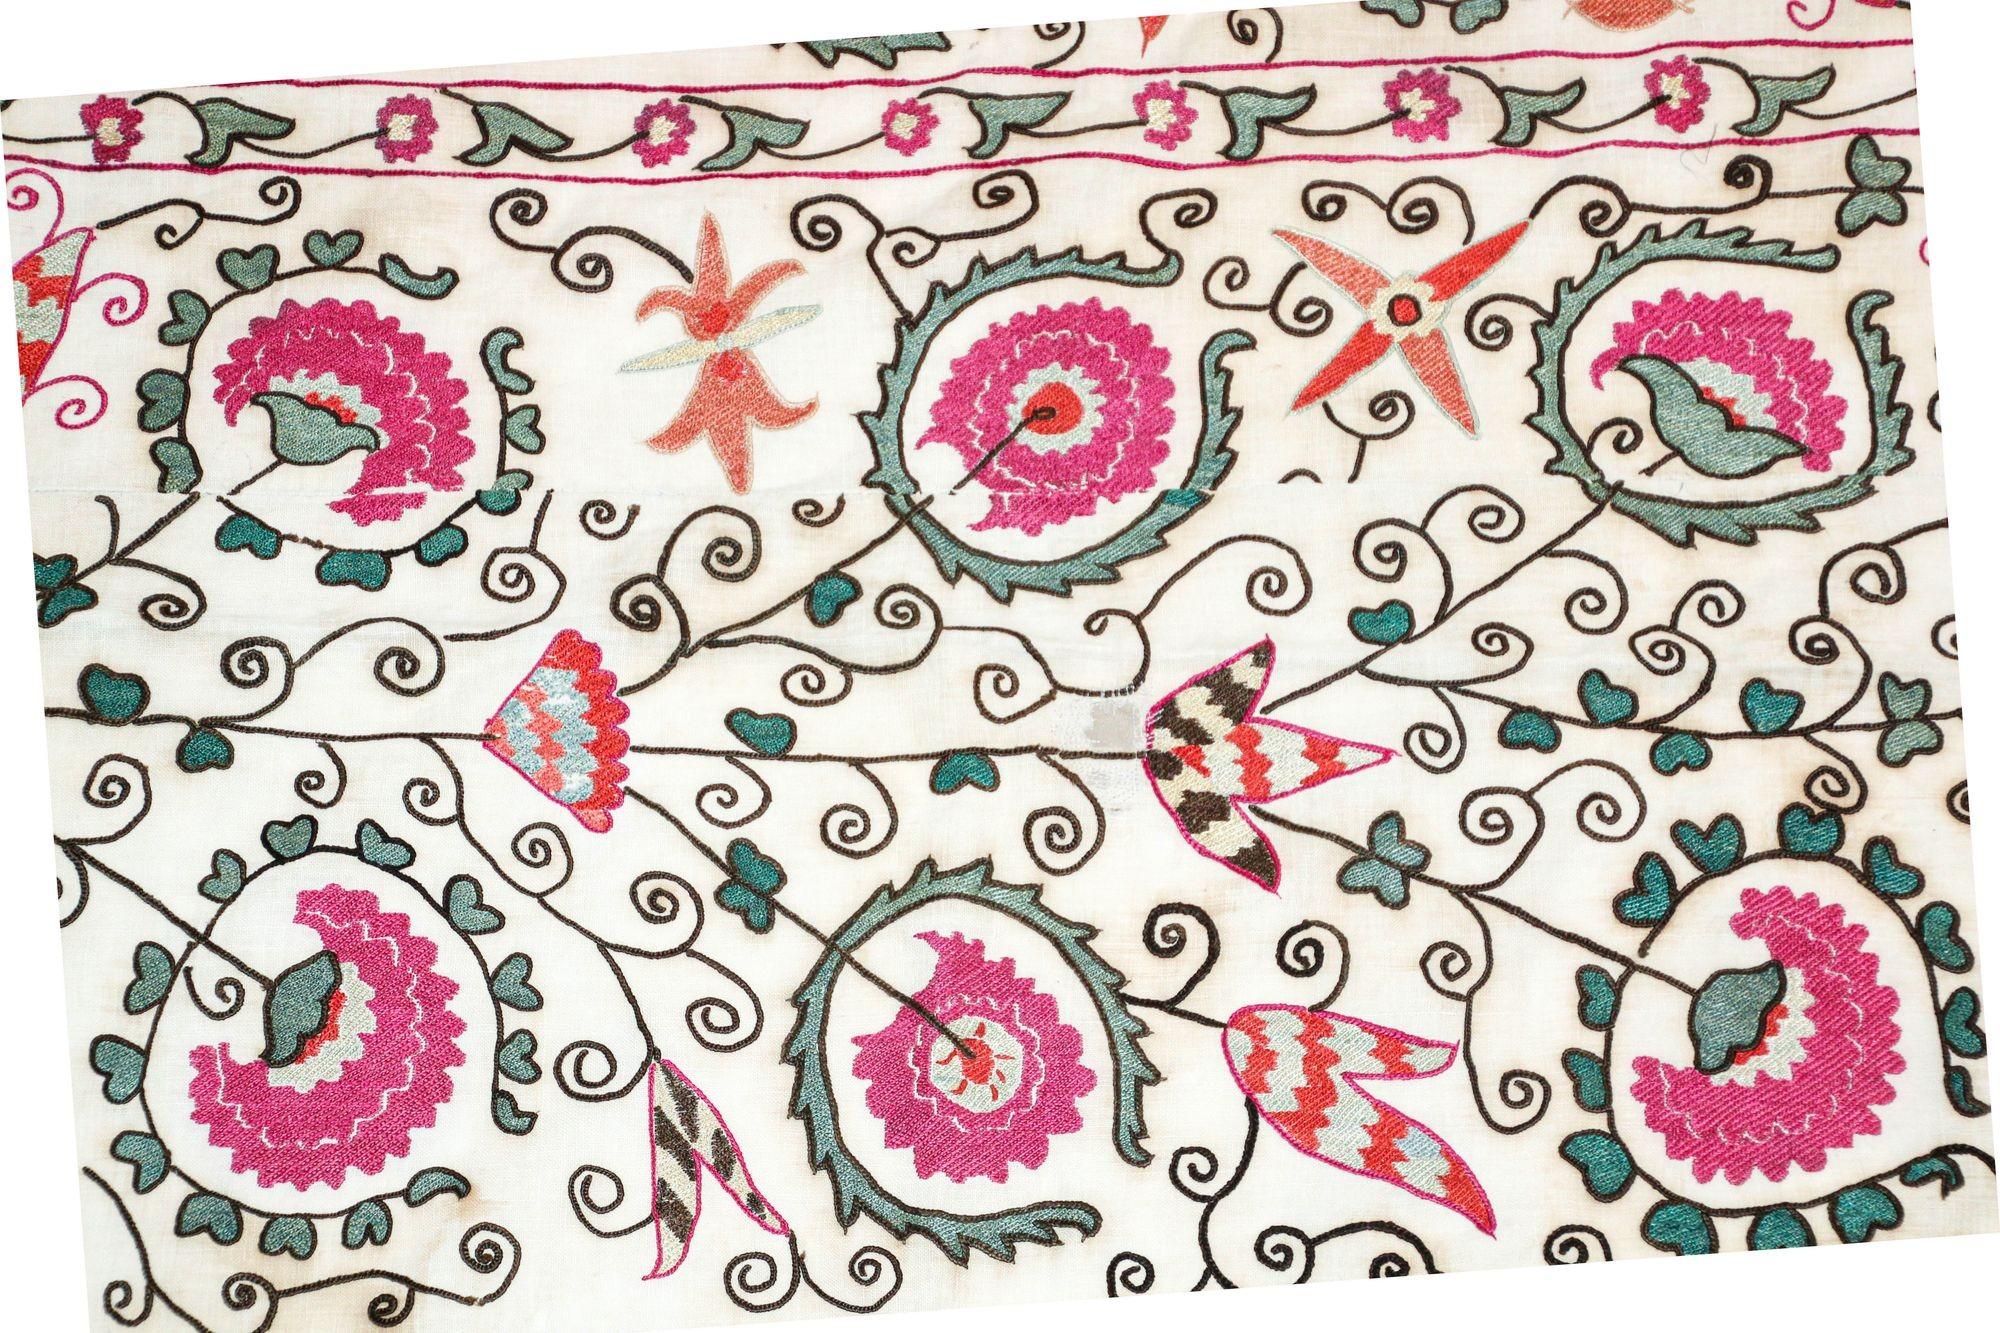 19th C. Suzani Bukhara Uzbekistan Antique Embroidered Islamic Art Textile Susani For Sale 4